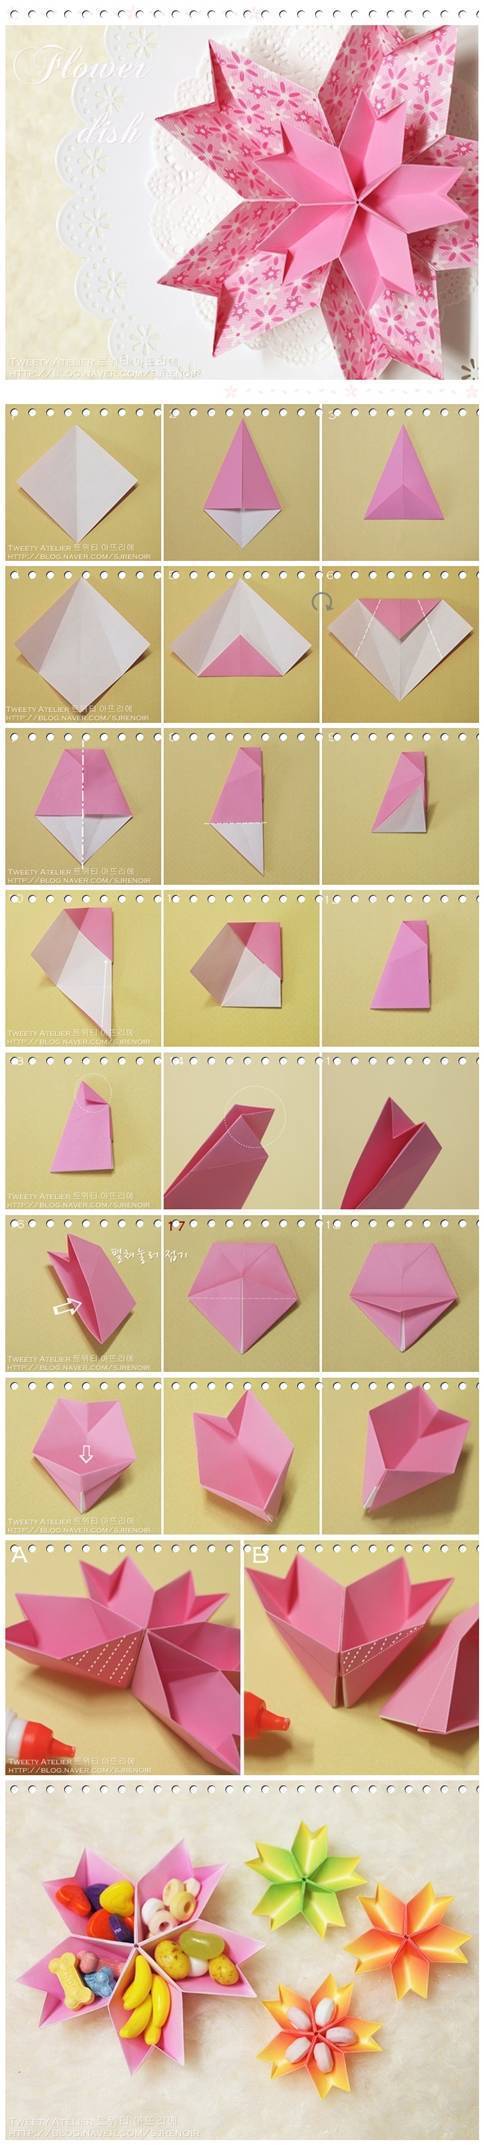 DIY Origami Flower Dish 2